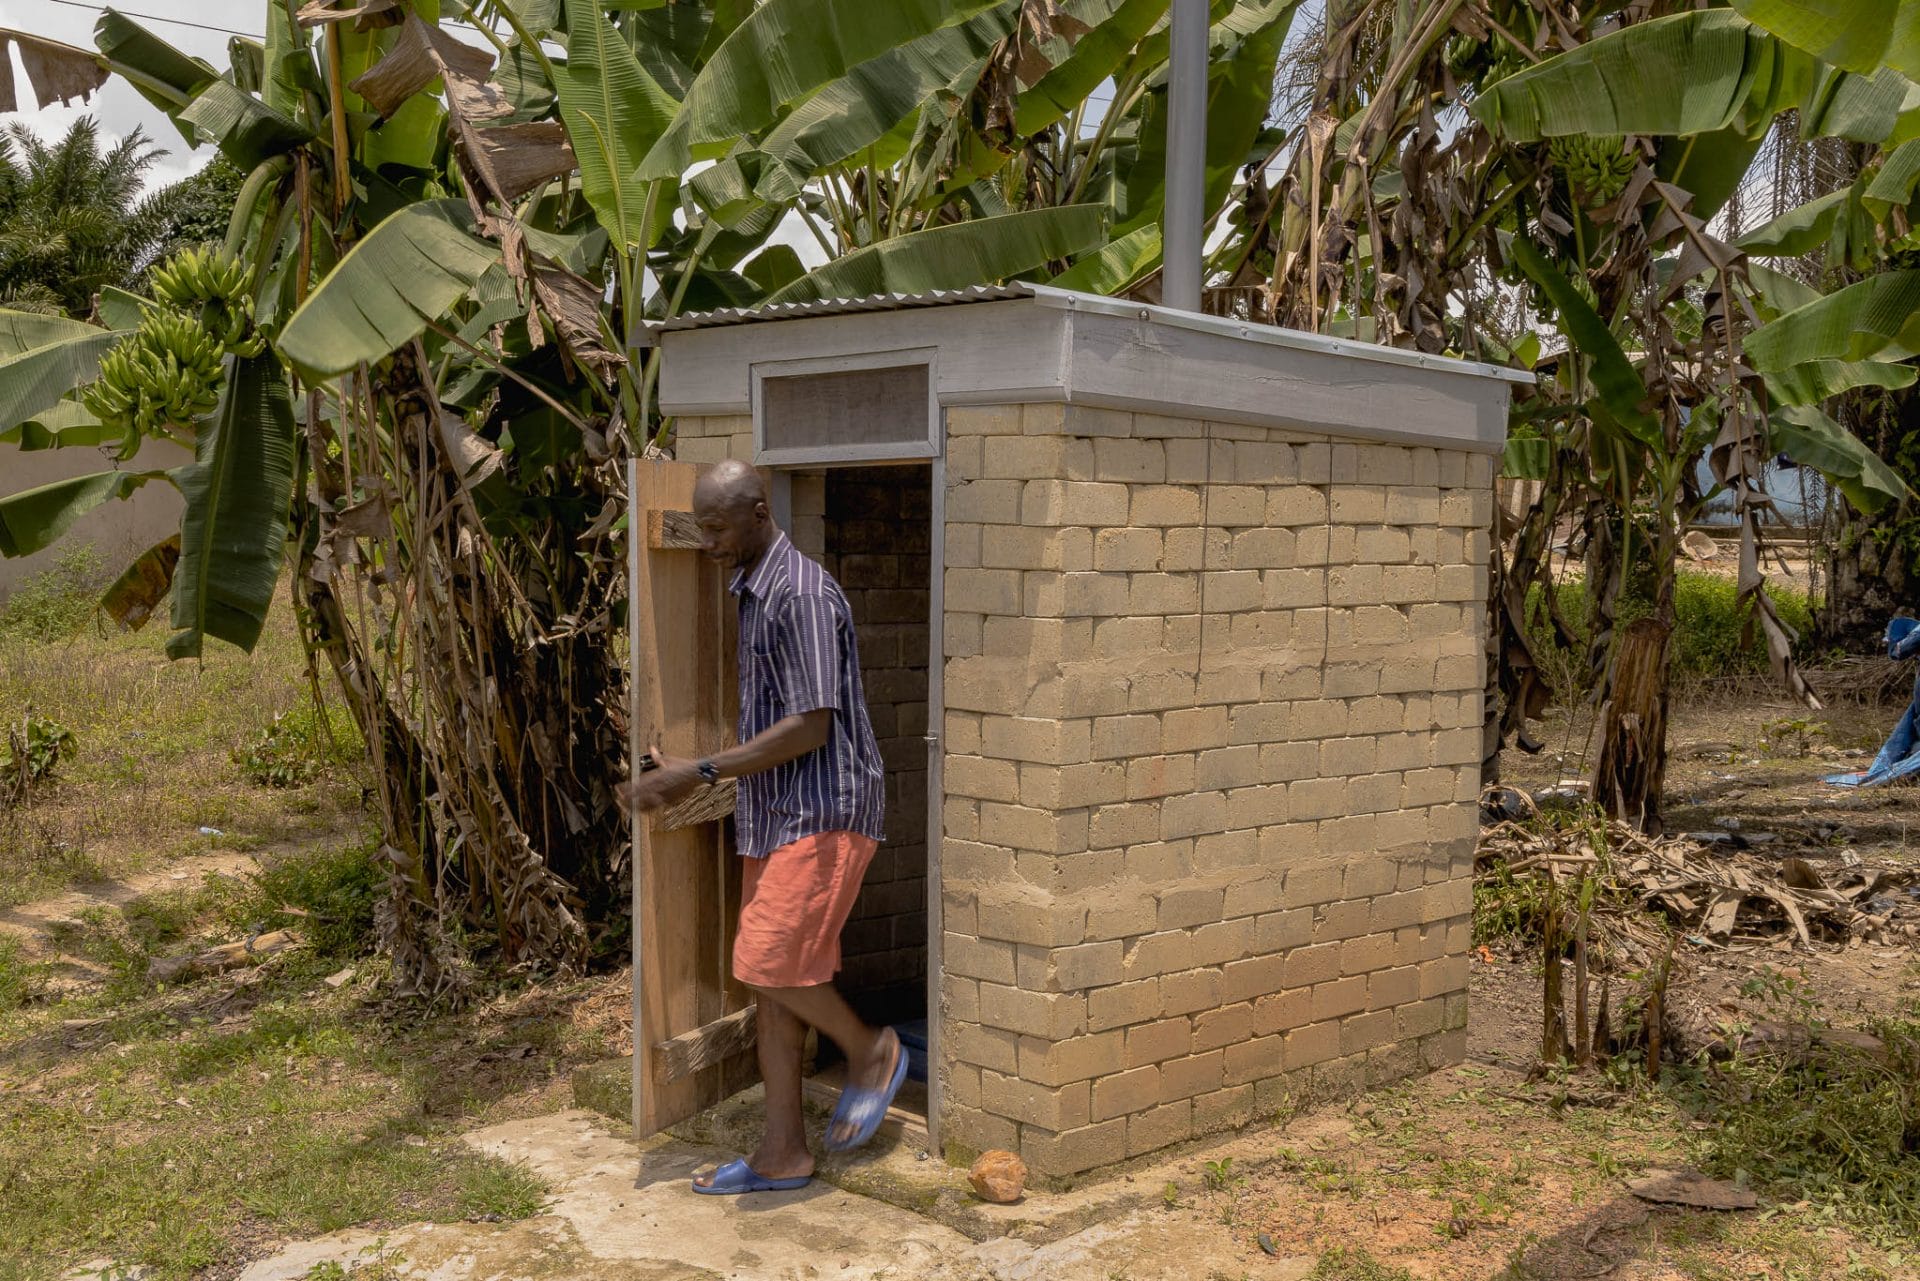 A man exiting a sanitation facillity (Digni-Loo installed washroom)